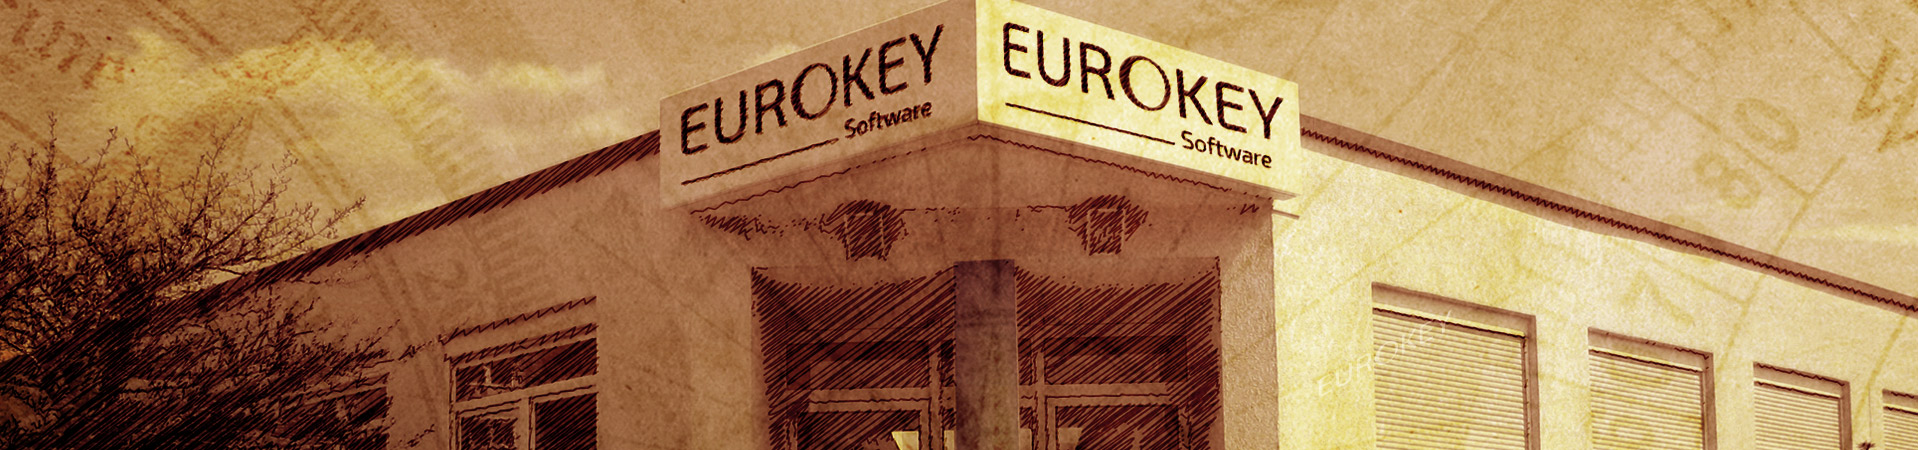 EUROKEY - die Software-Manufaktur